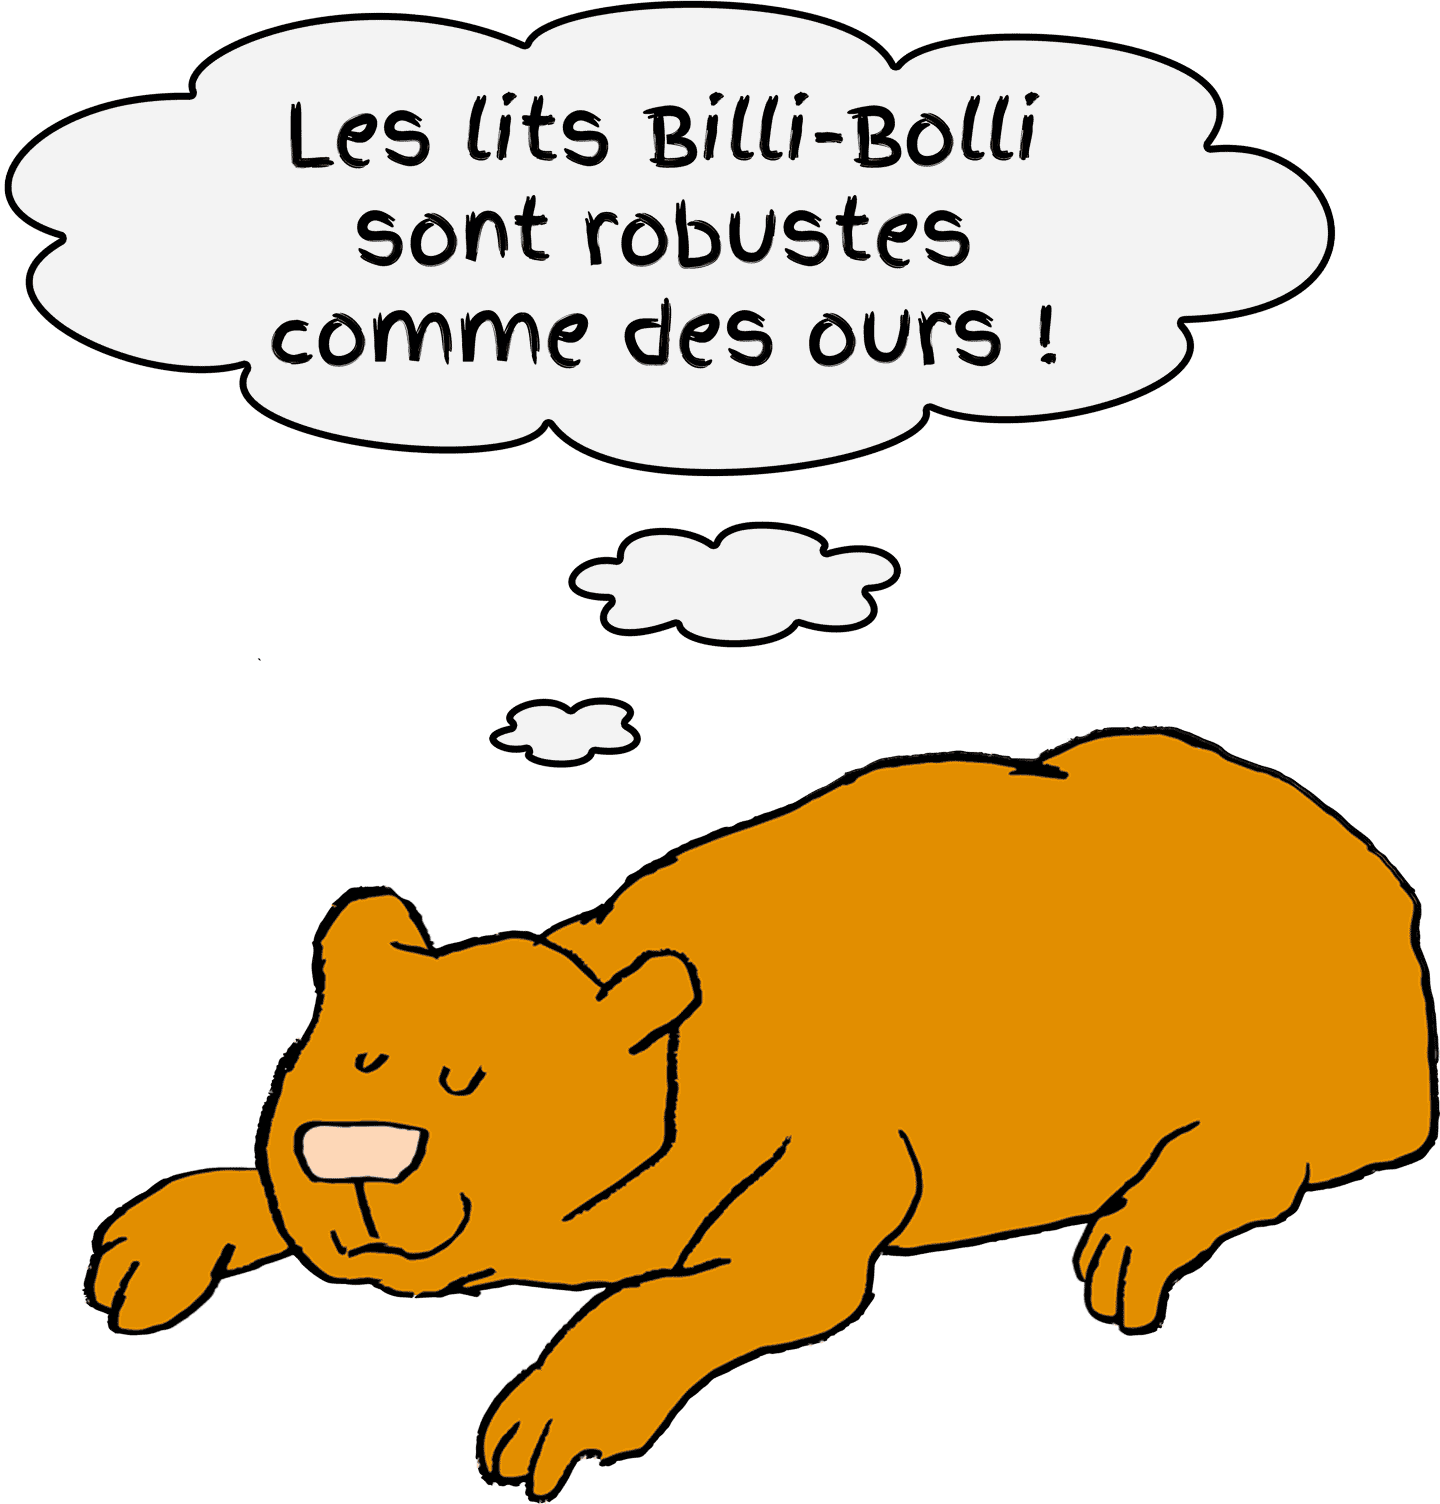 Billi-Bolli-Bär